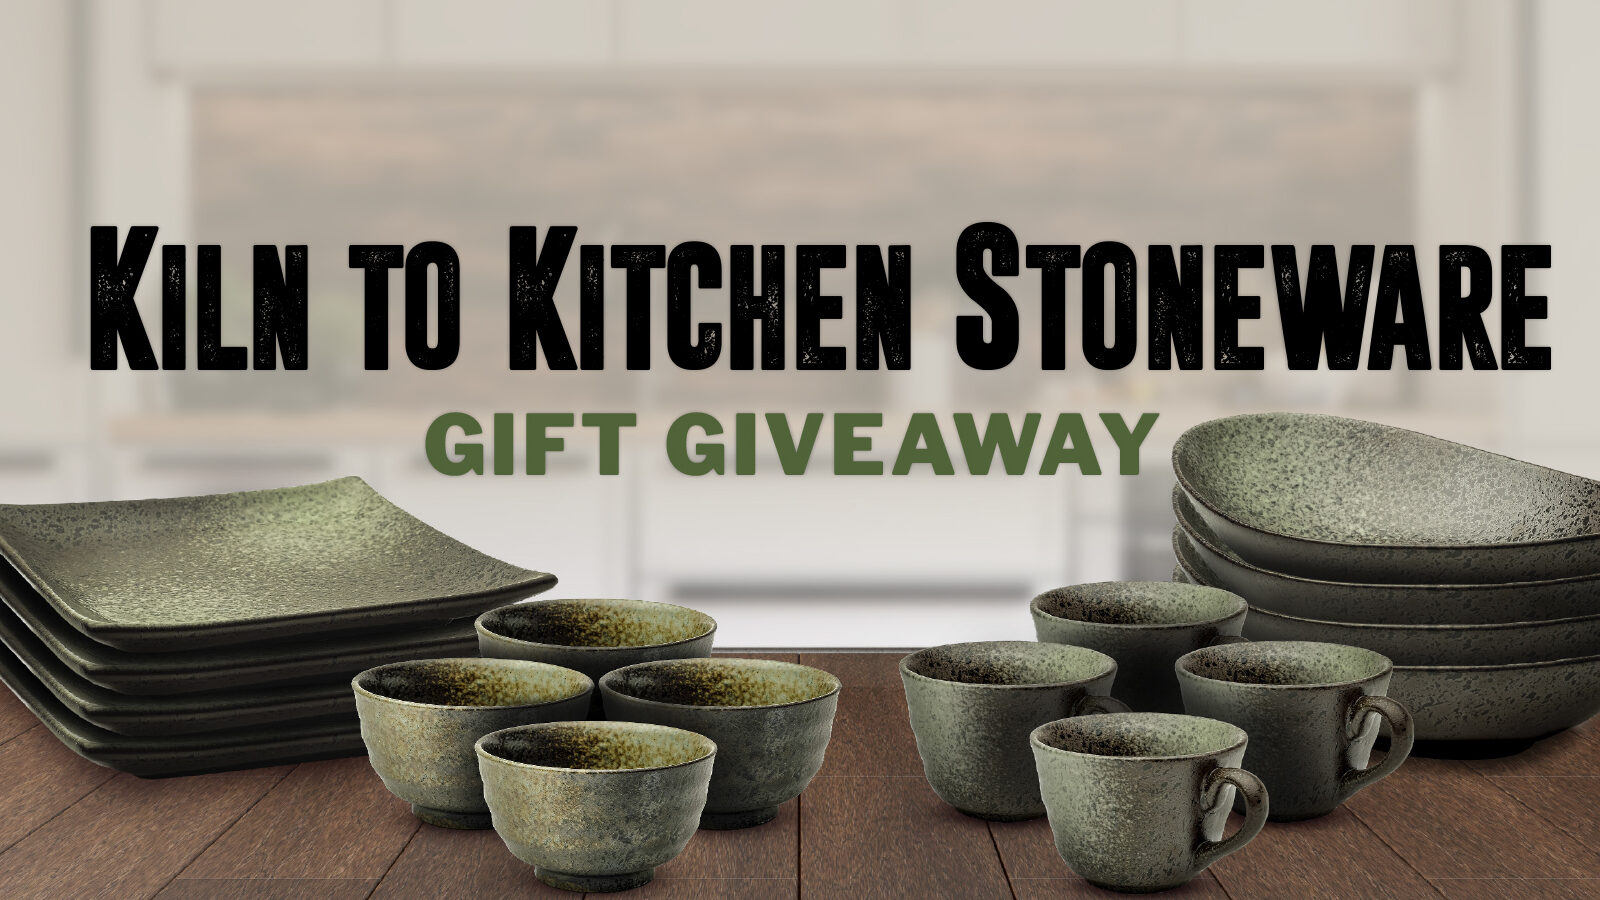 Kiln to Kitchen Stoneware Gift Giveaway